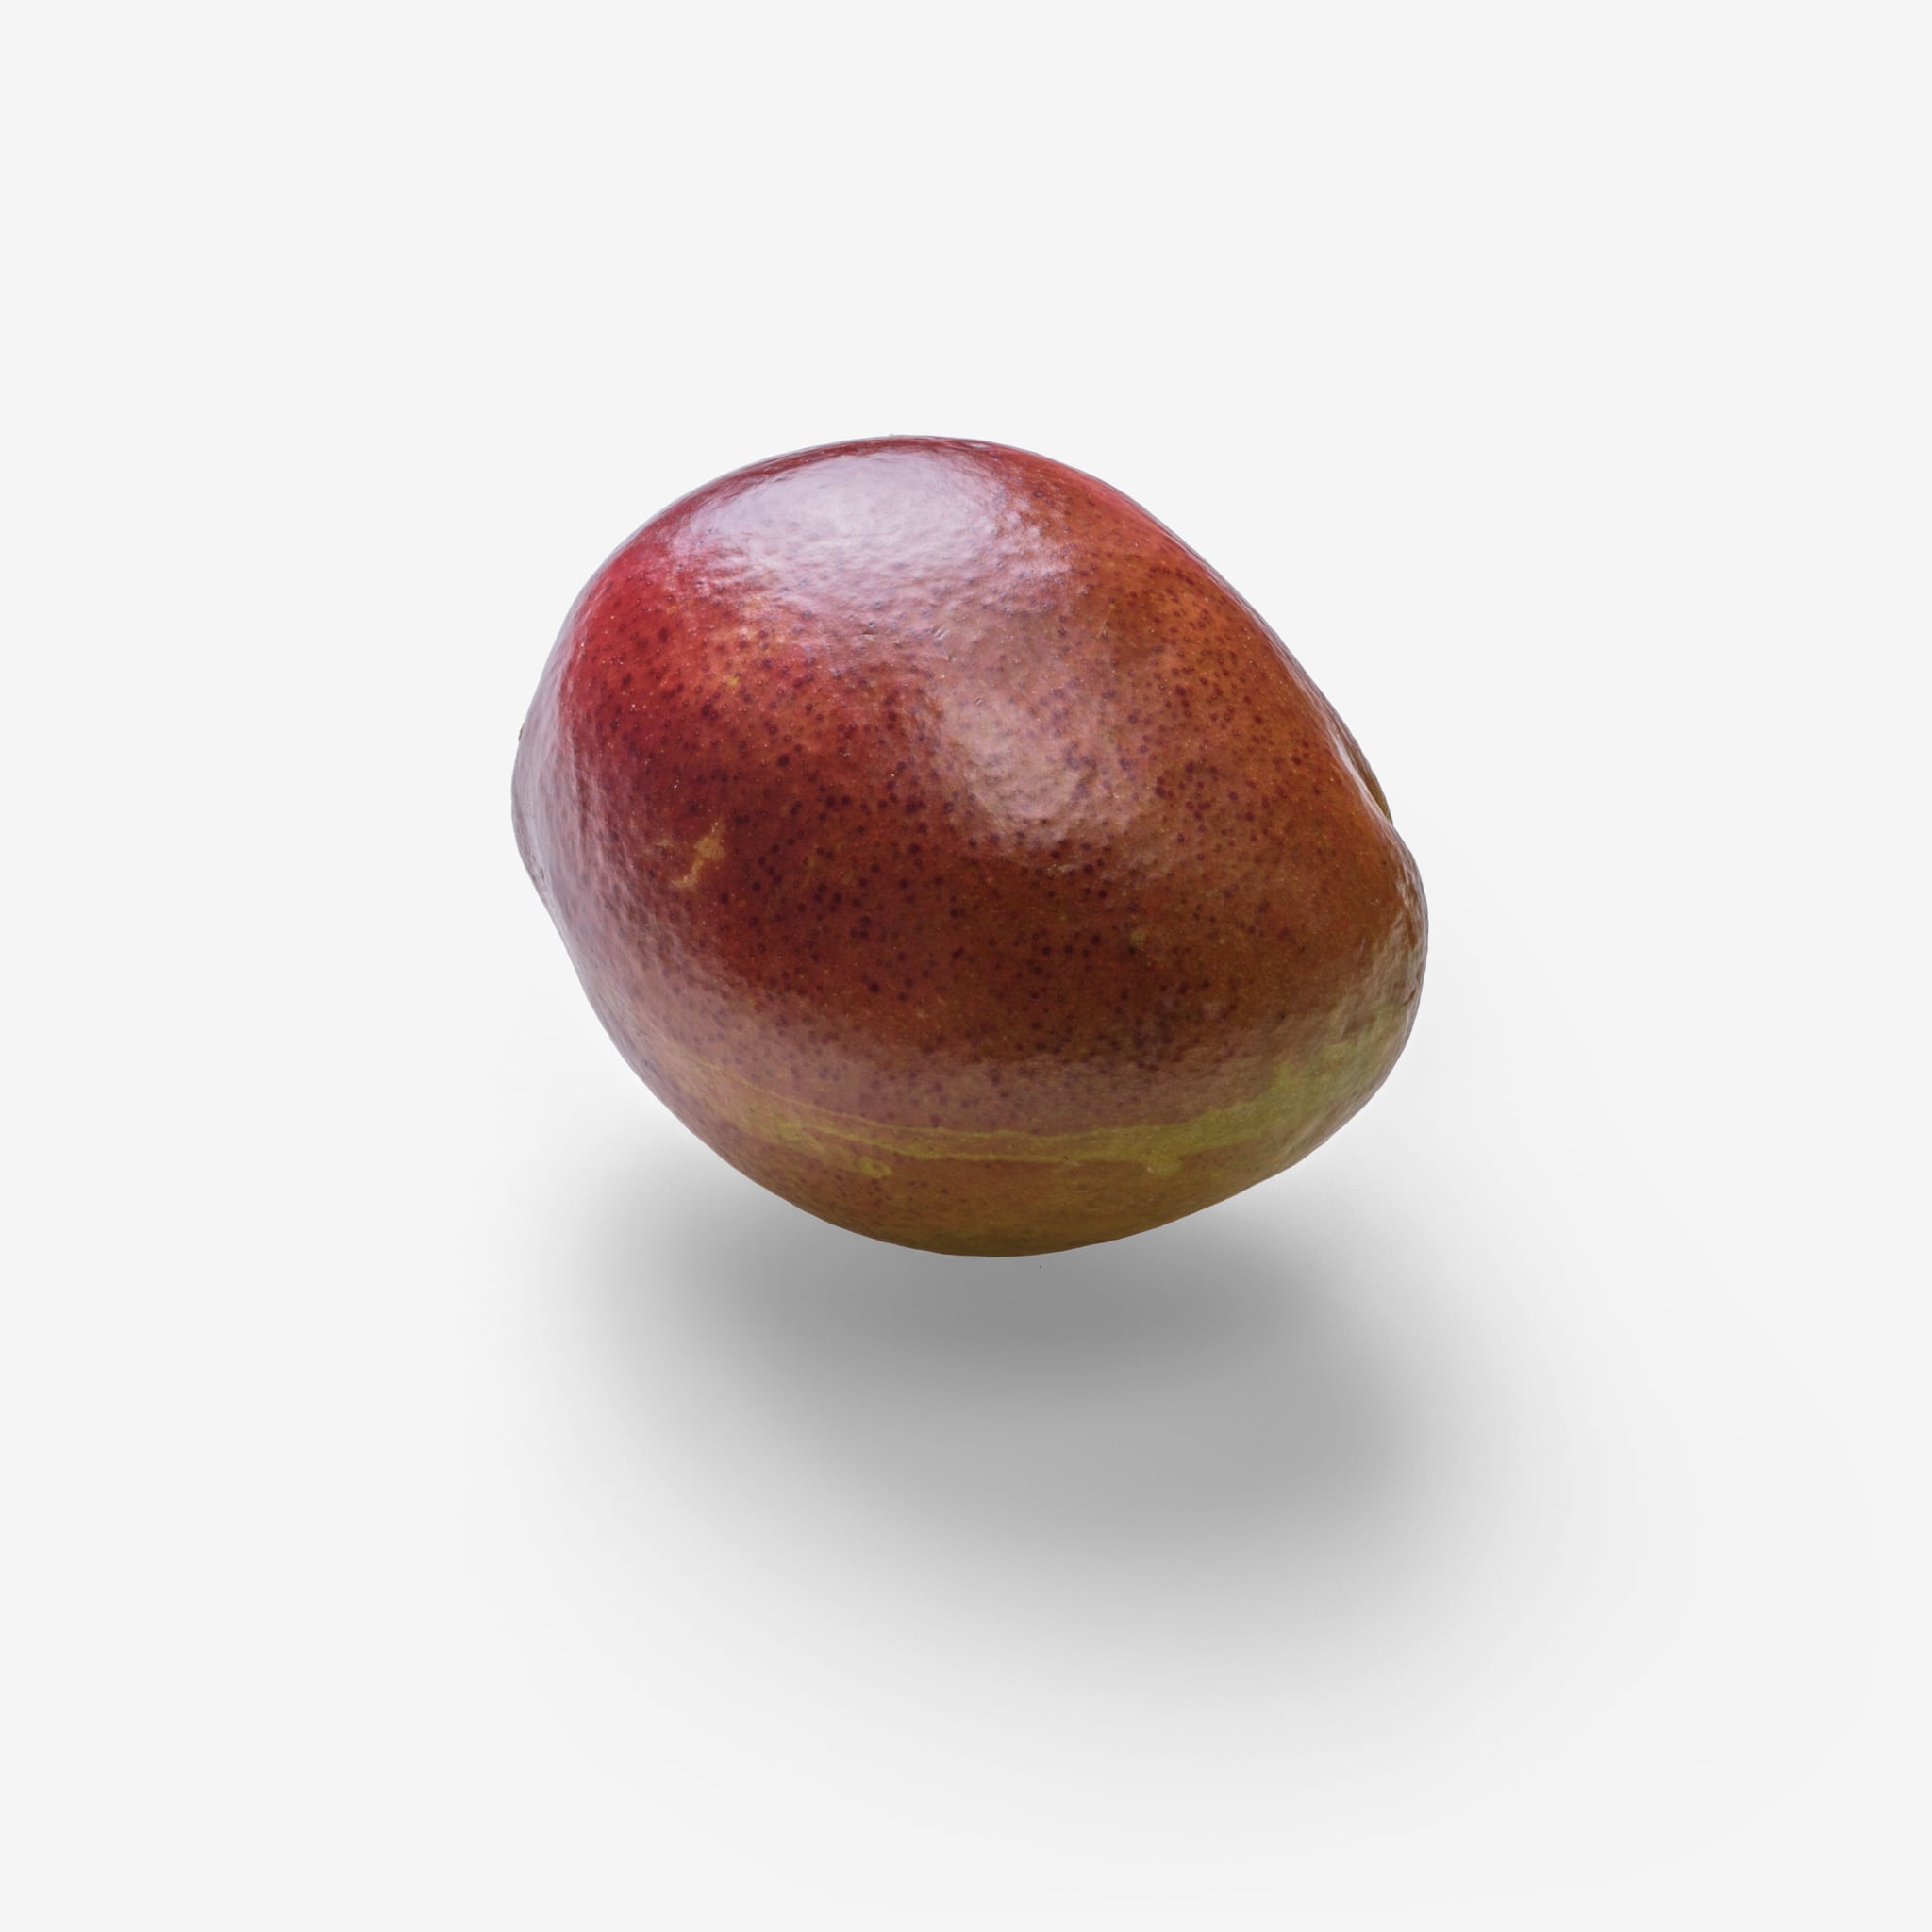 Mango image asset with transparent background